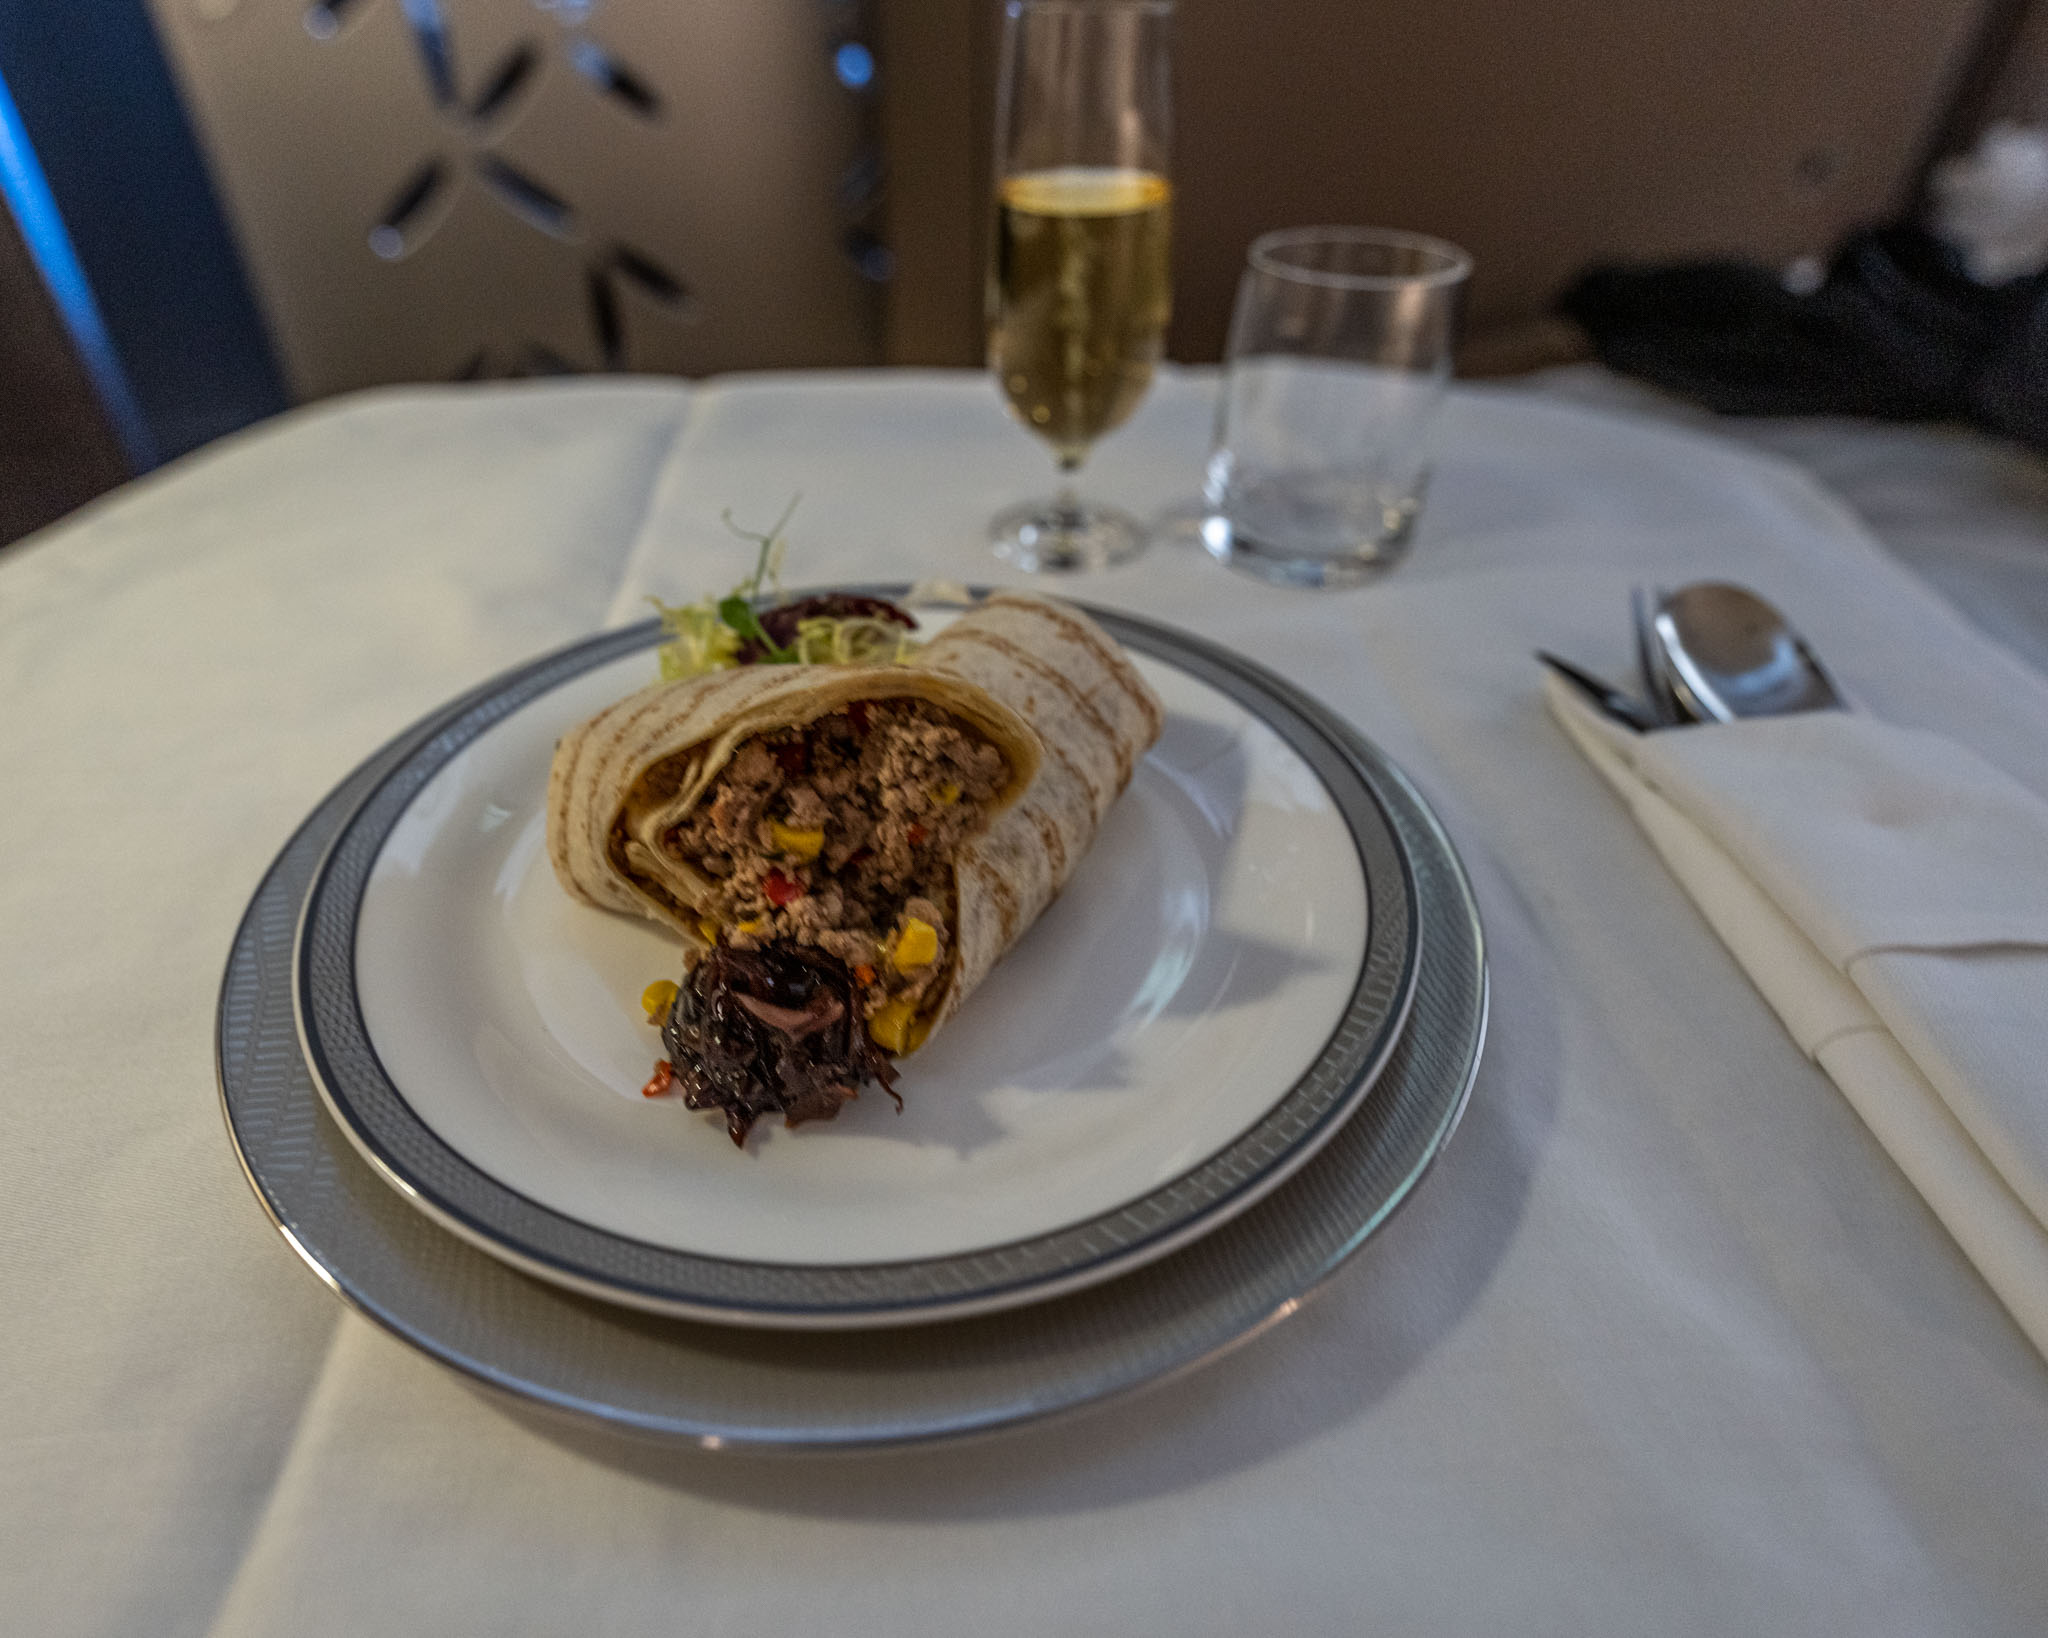 a burrito on a plate